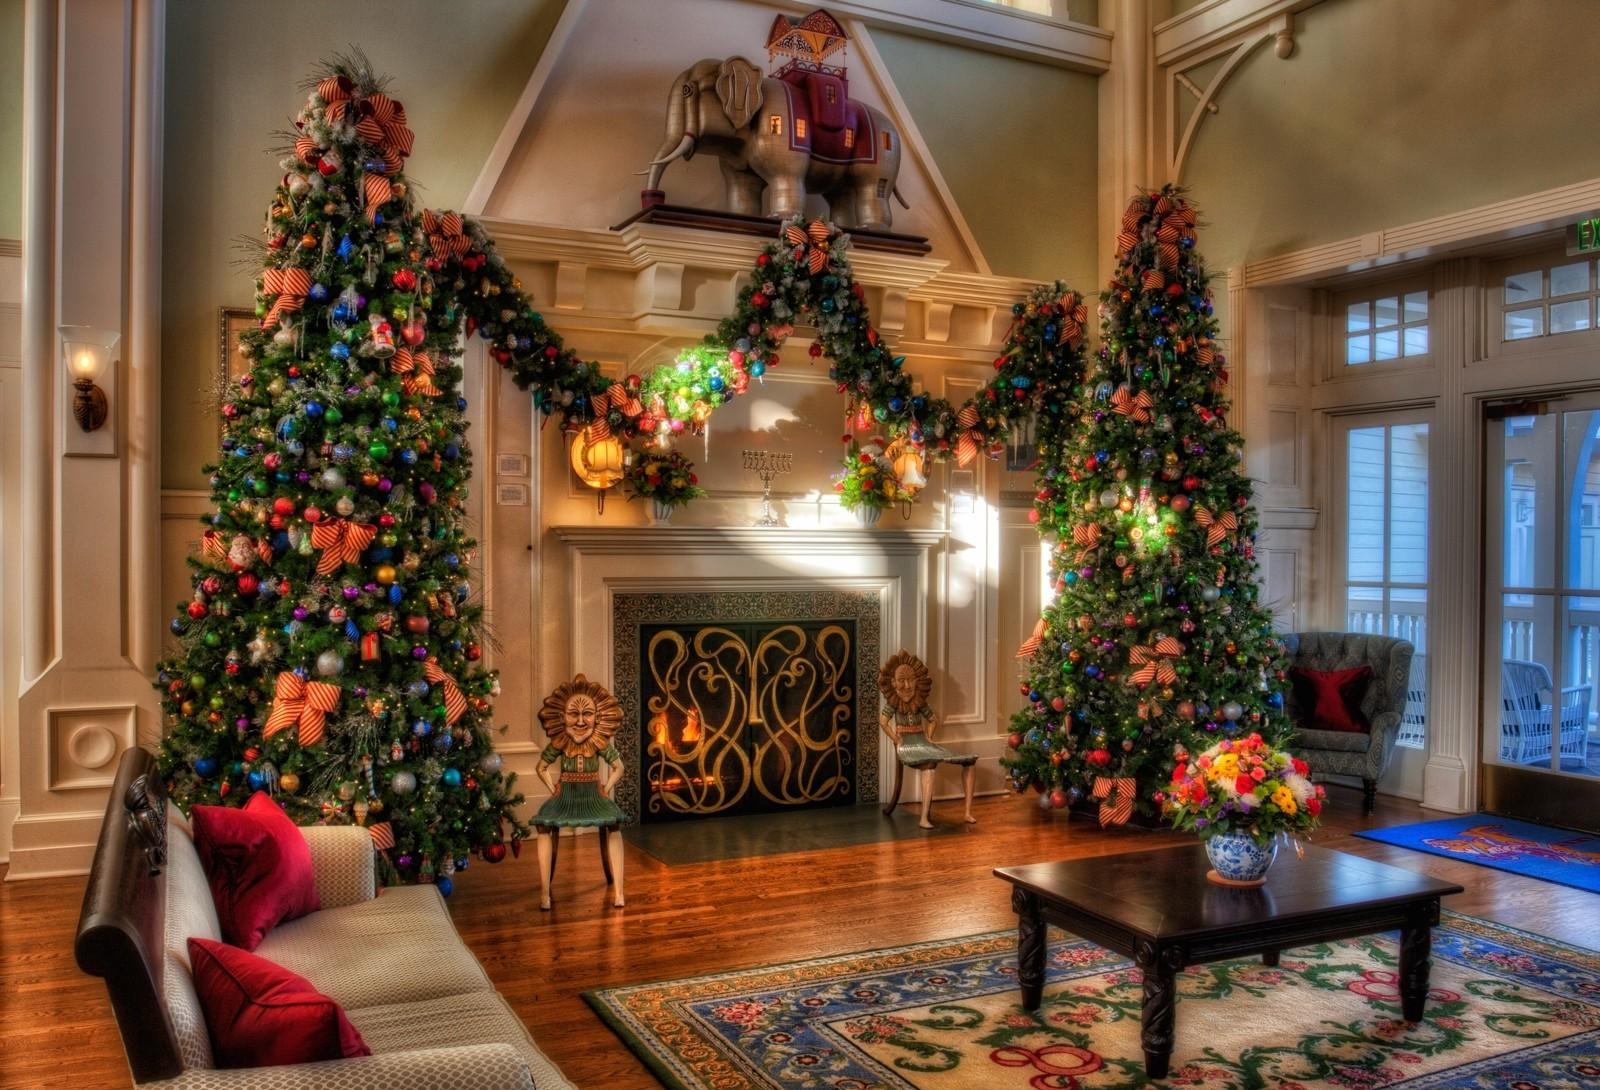 holidays, coziness, decorations, interior, holiday, house, comfort, fireplace, christmas trees